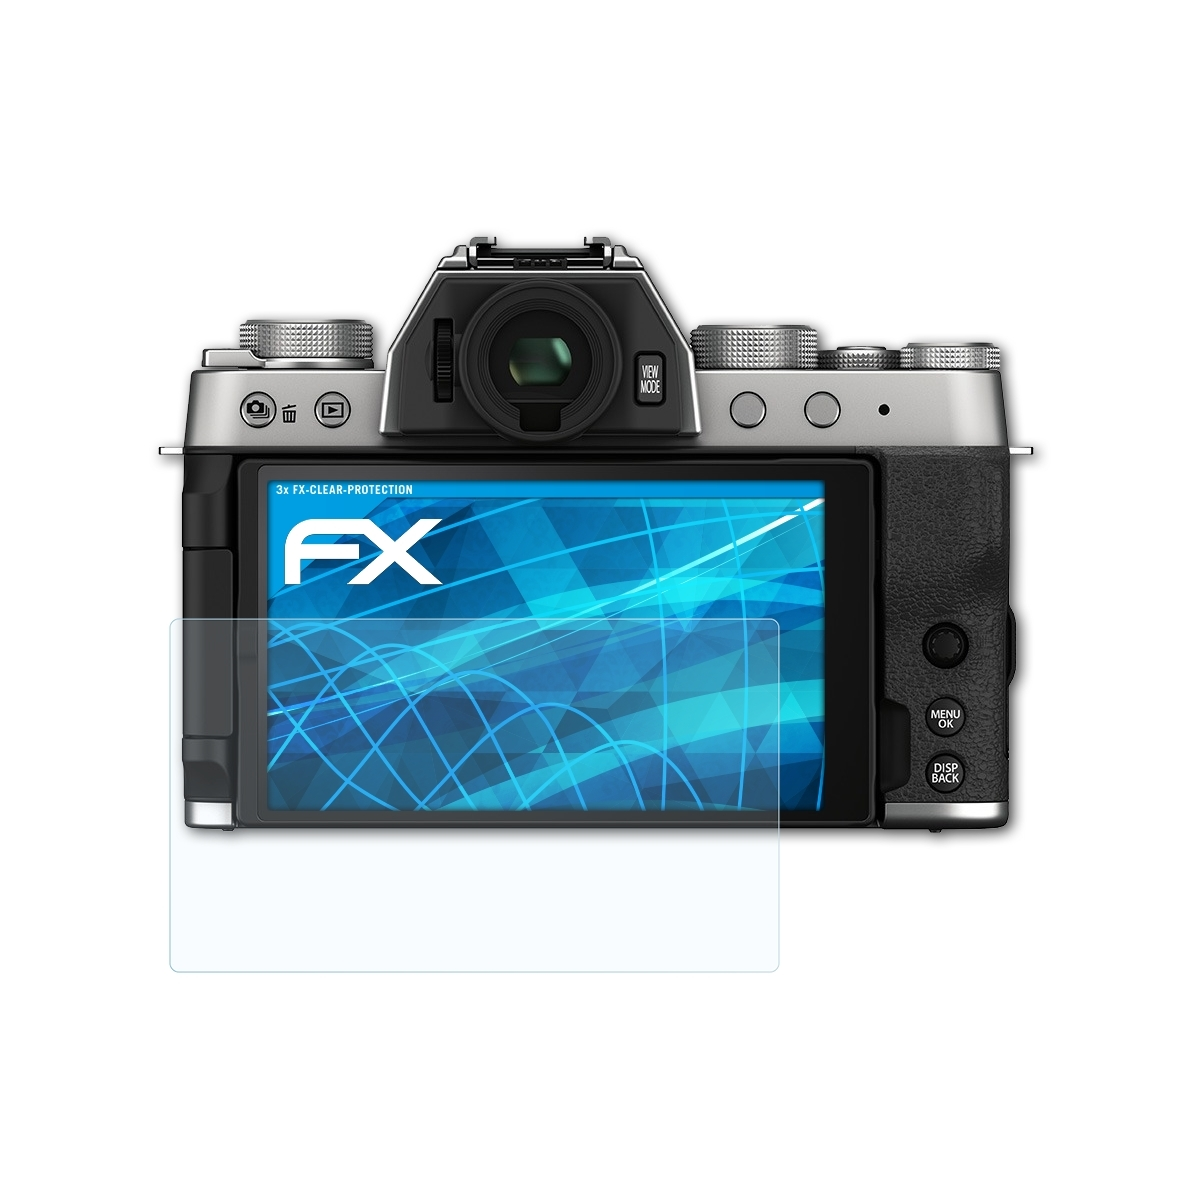 FX-Clear X-T200) 3x Displayschutz(für Fujifilm ATFOLIX